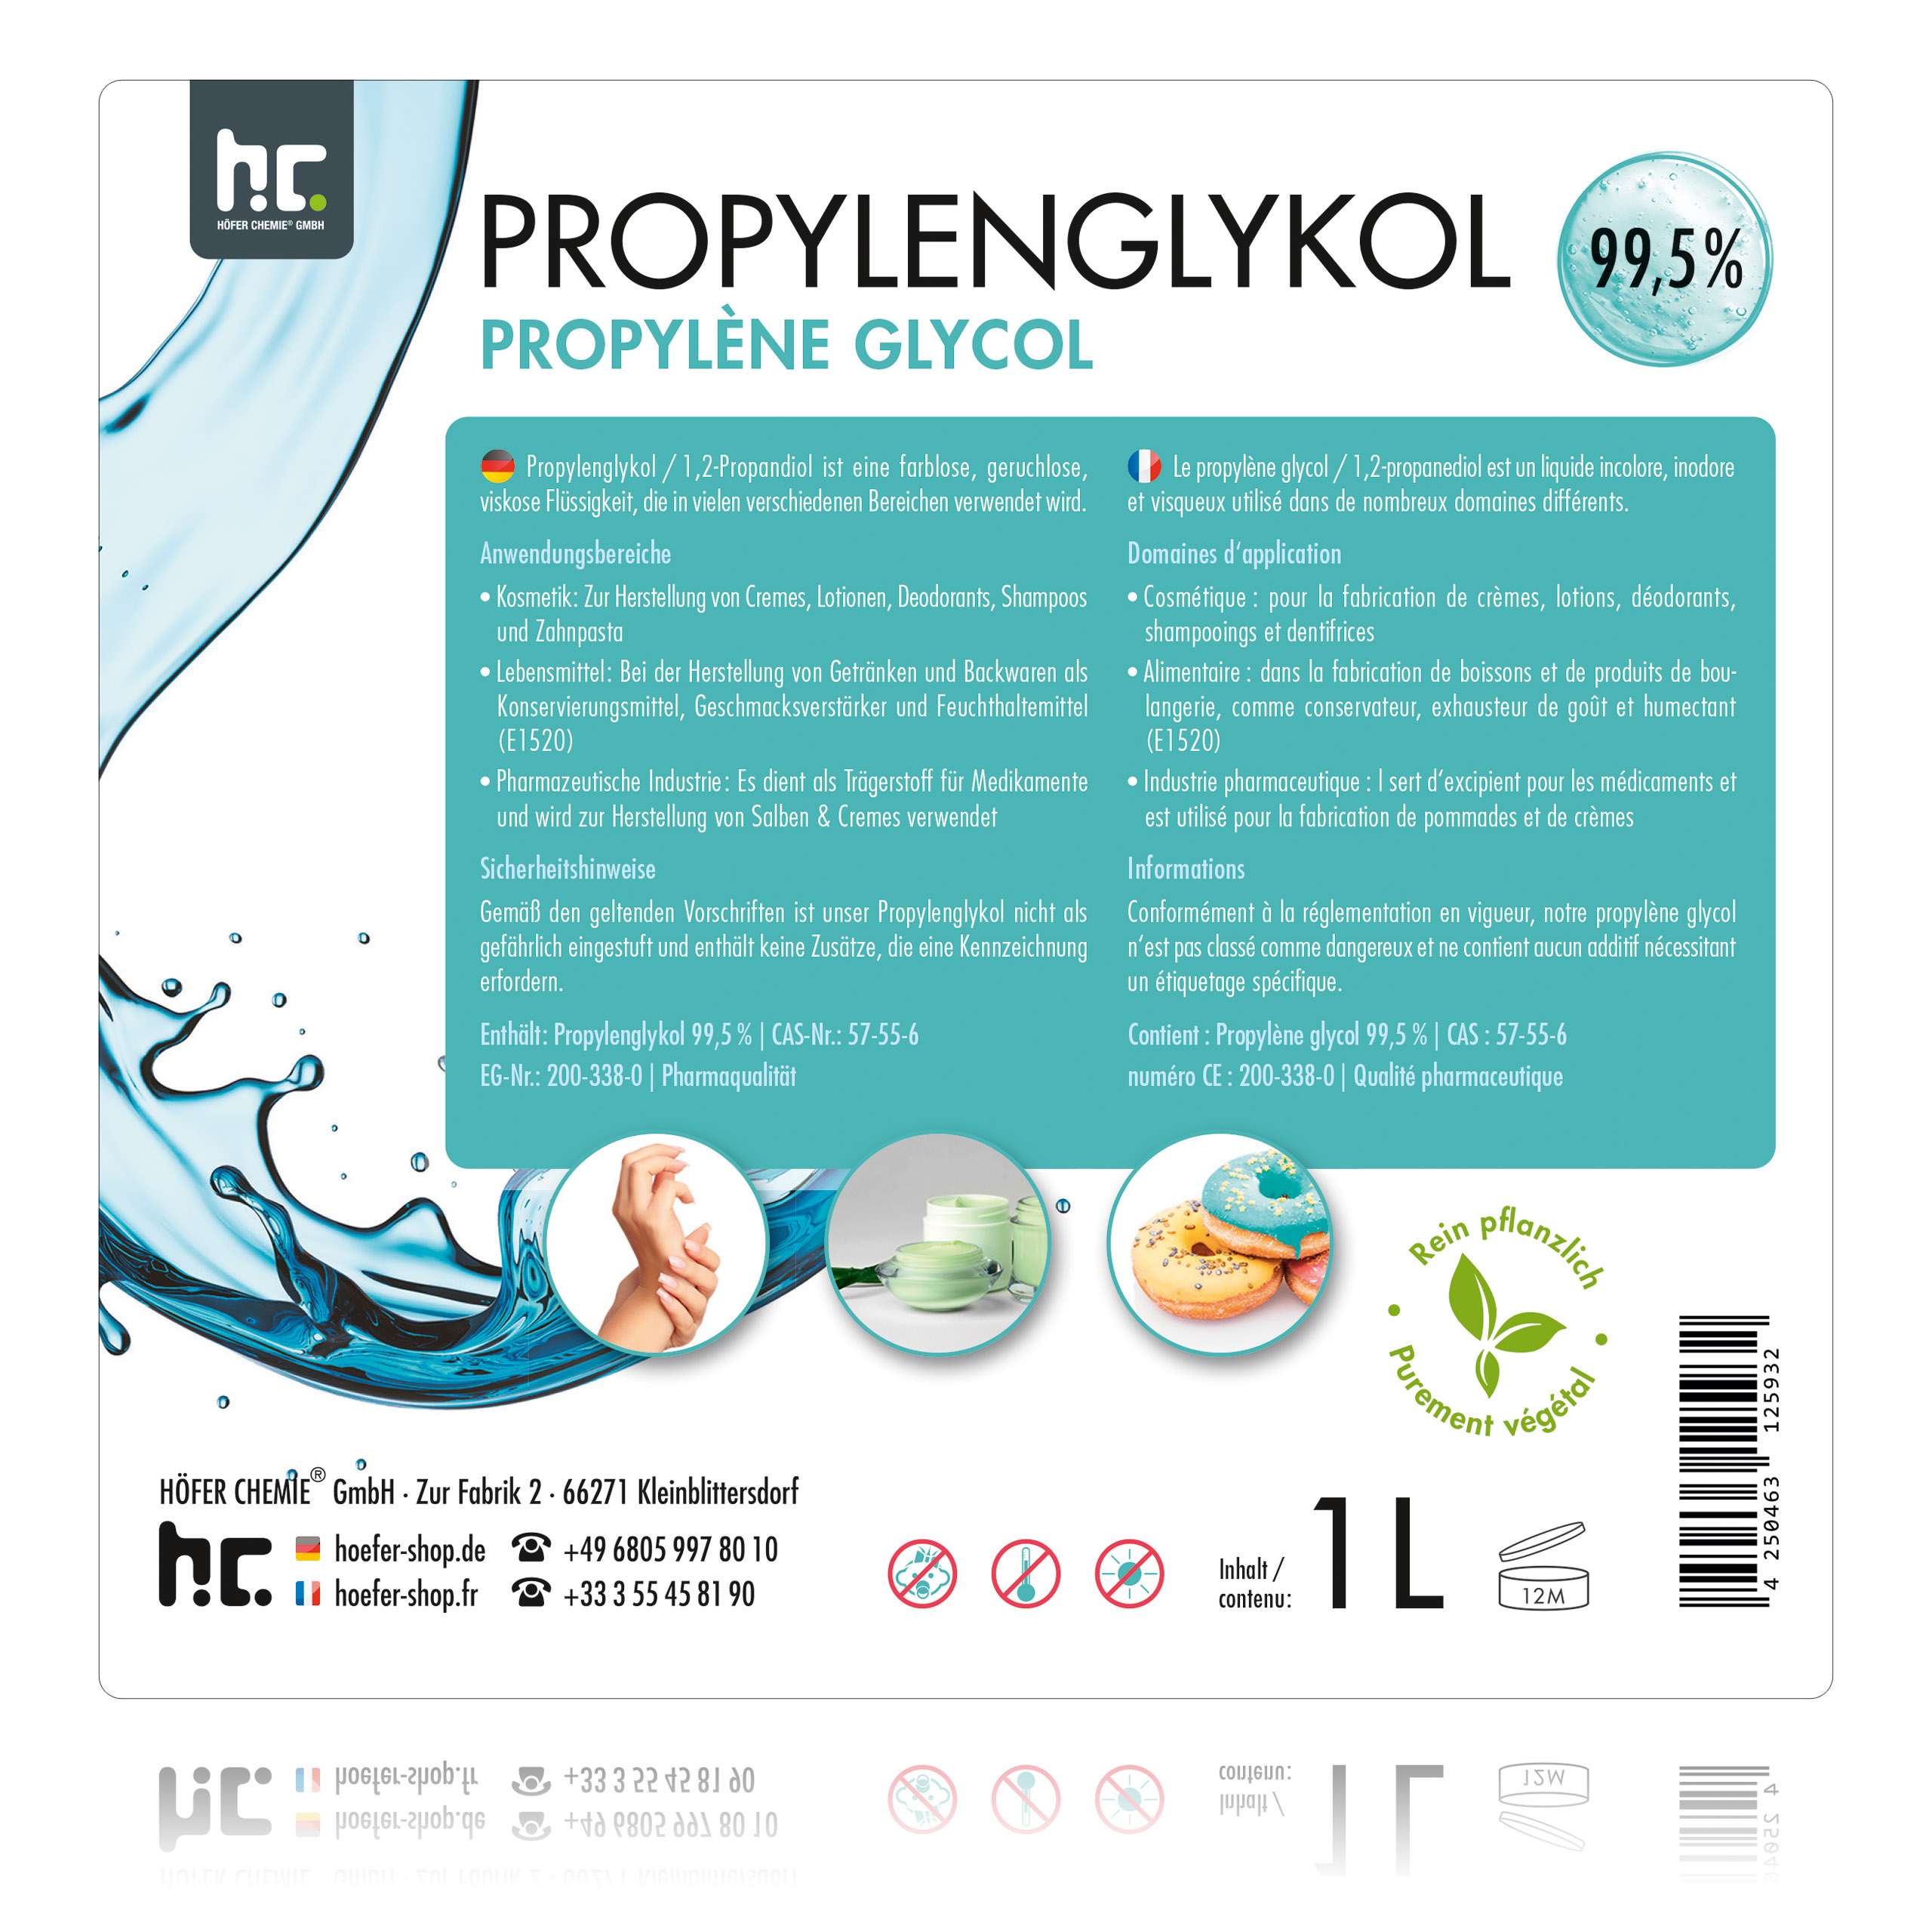 Set 1 L Propylenglykol & 1 L Glycerin